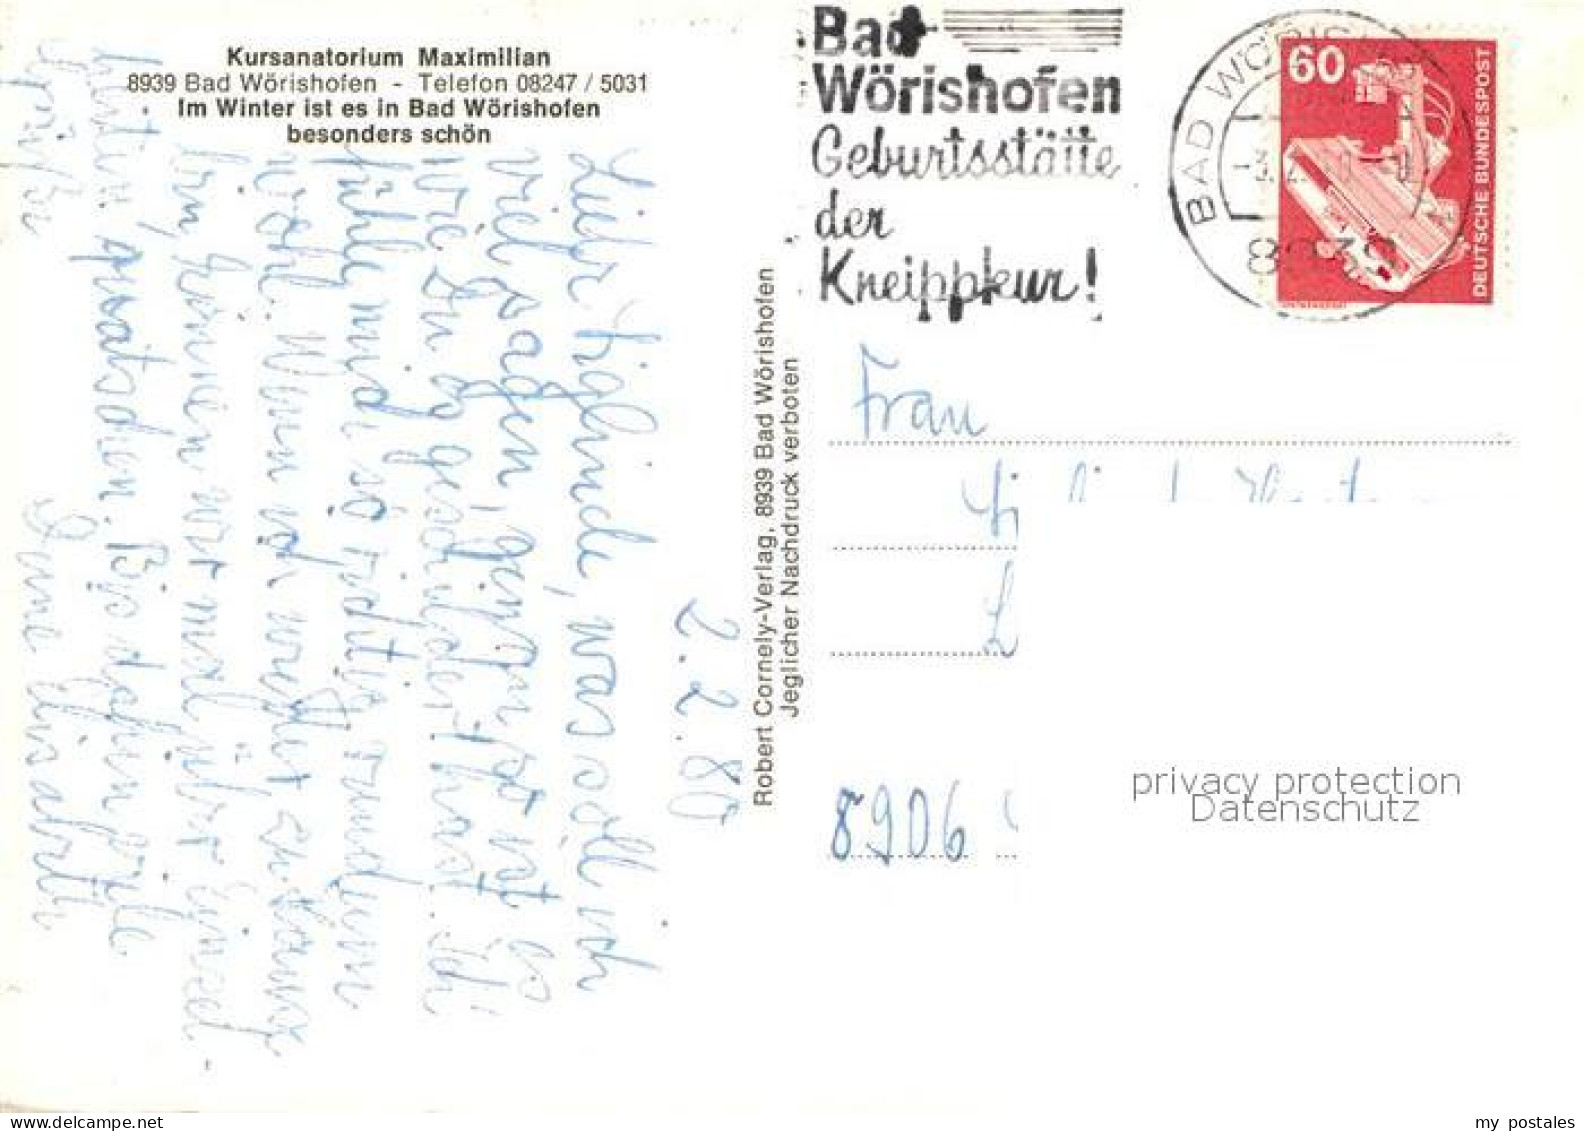 72946635 Bad Woerishofen Kursanatorium Maximilian Im Winter Bad Woerishofen - Bad Woerishofen